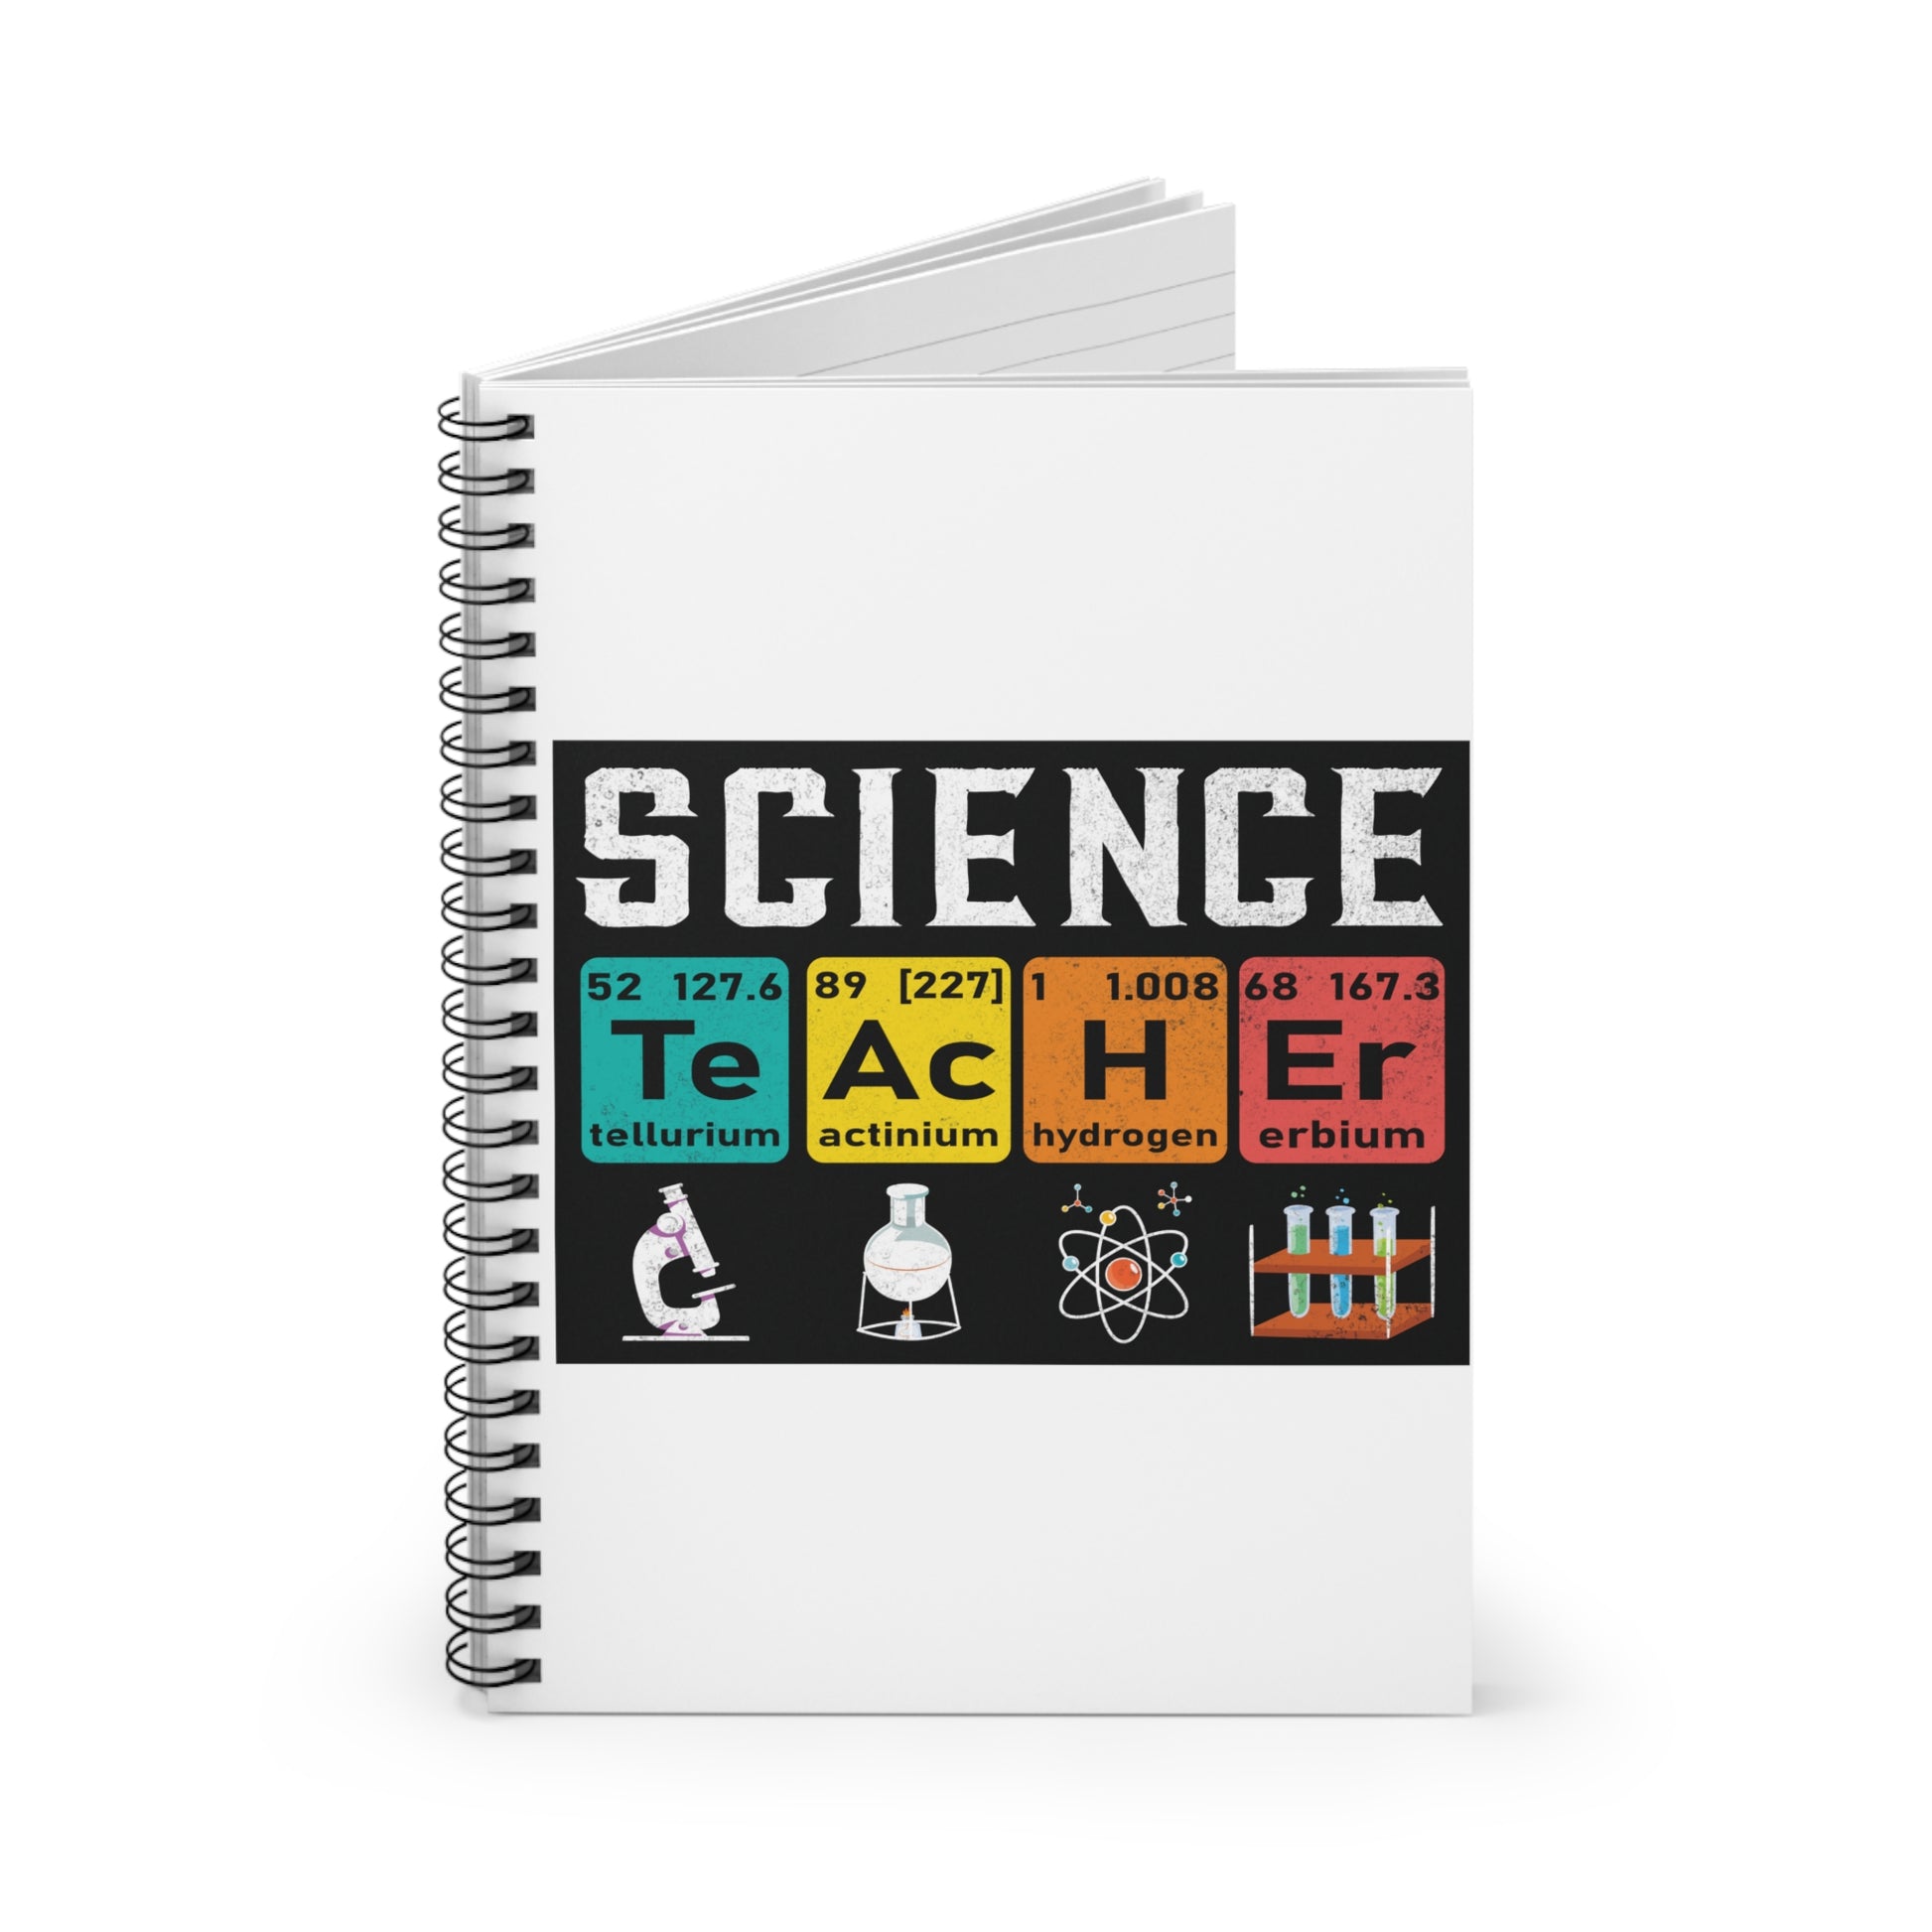 Science Teacher: Spiral Notebook - Log Books - Journals - Diaries - and More Custom Printed by TheGlassyLass.com